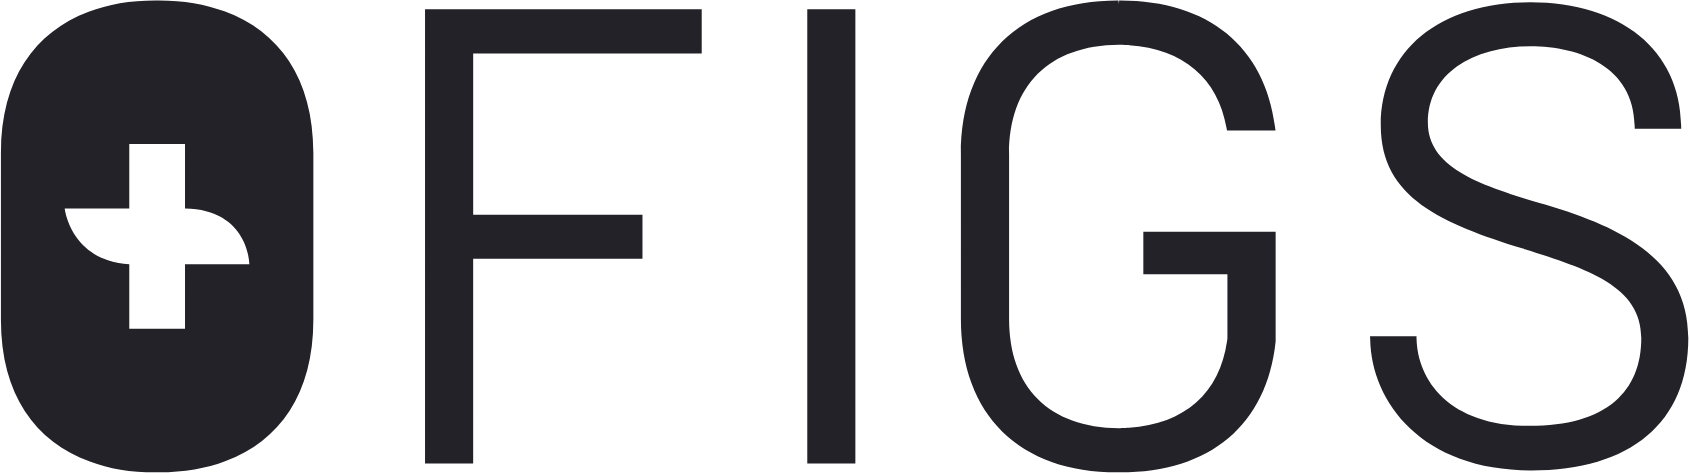 FIGS logo large (transparent PNG)